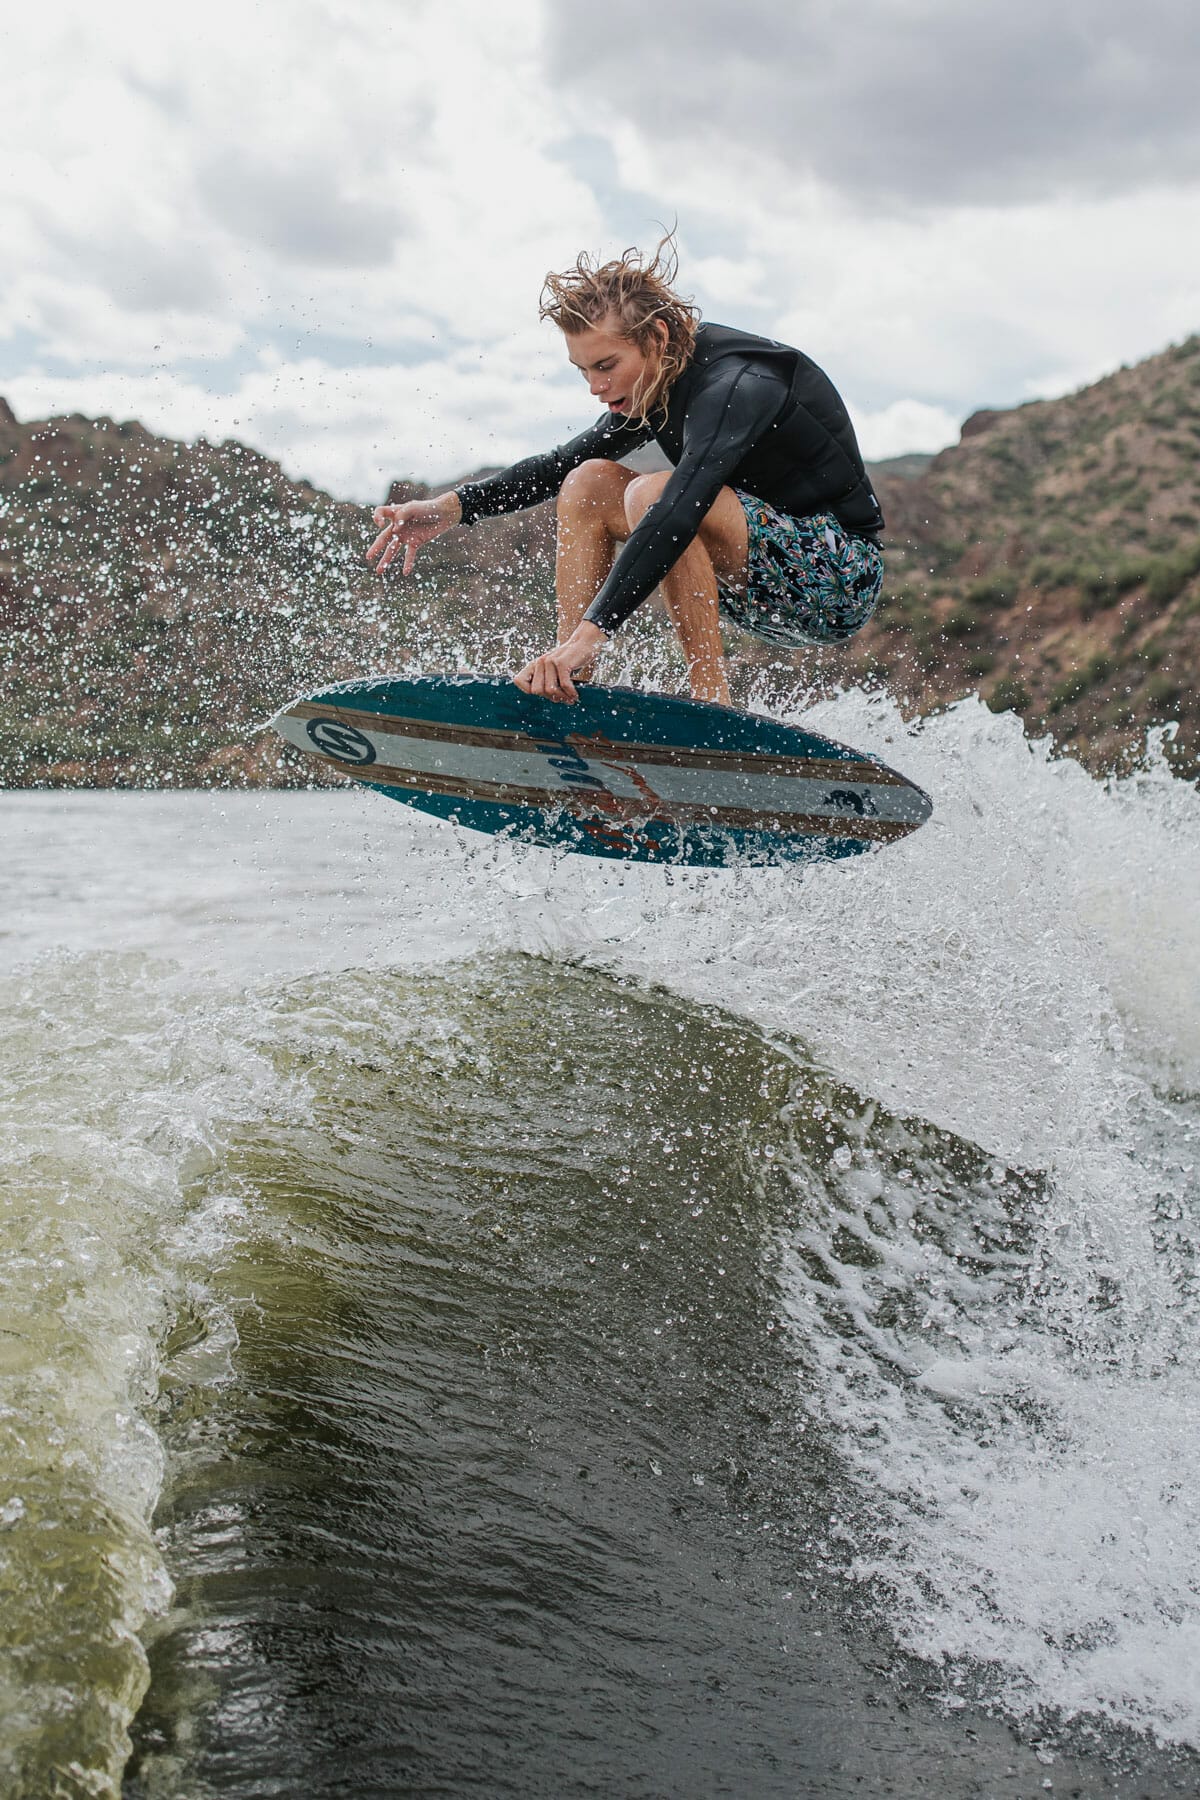 A man rides a wakesurf board.